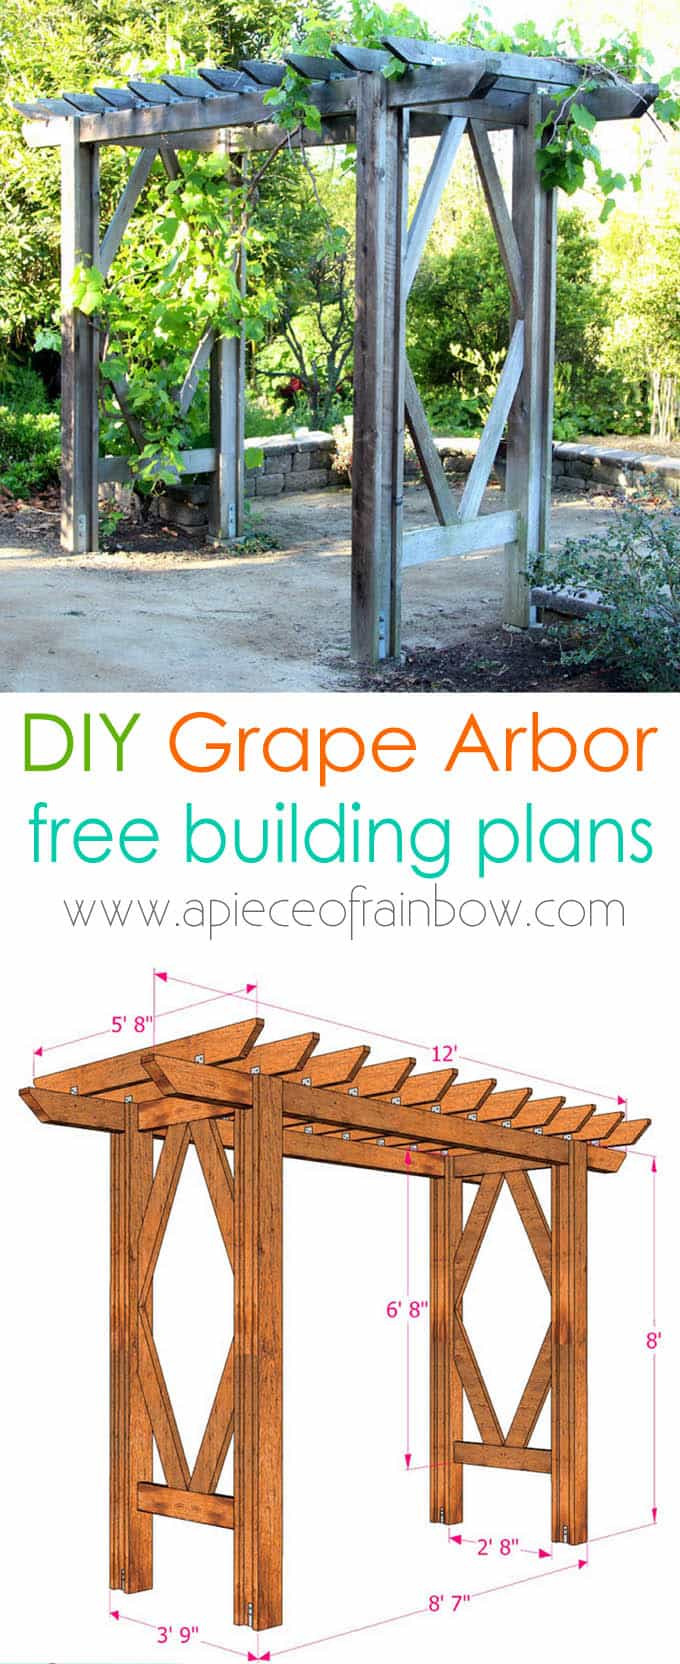 Best ideas about DIY Arbors Plans
. Save or Pin DIY Grape Arbor Simple DIY Pergola Free Building Plan Now.